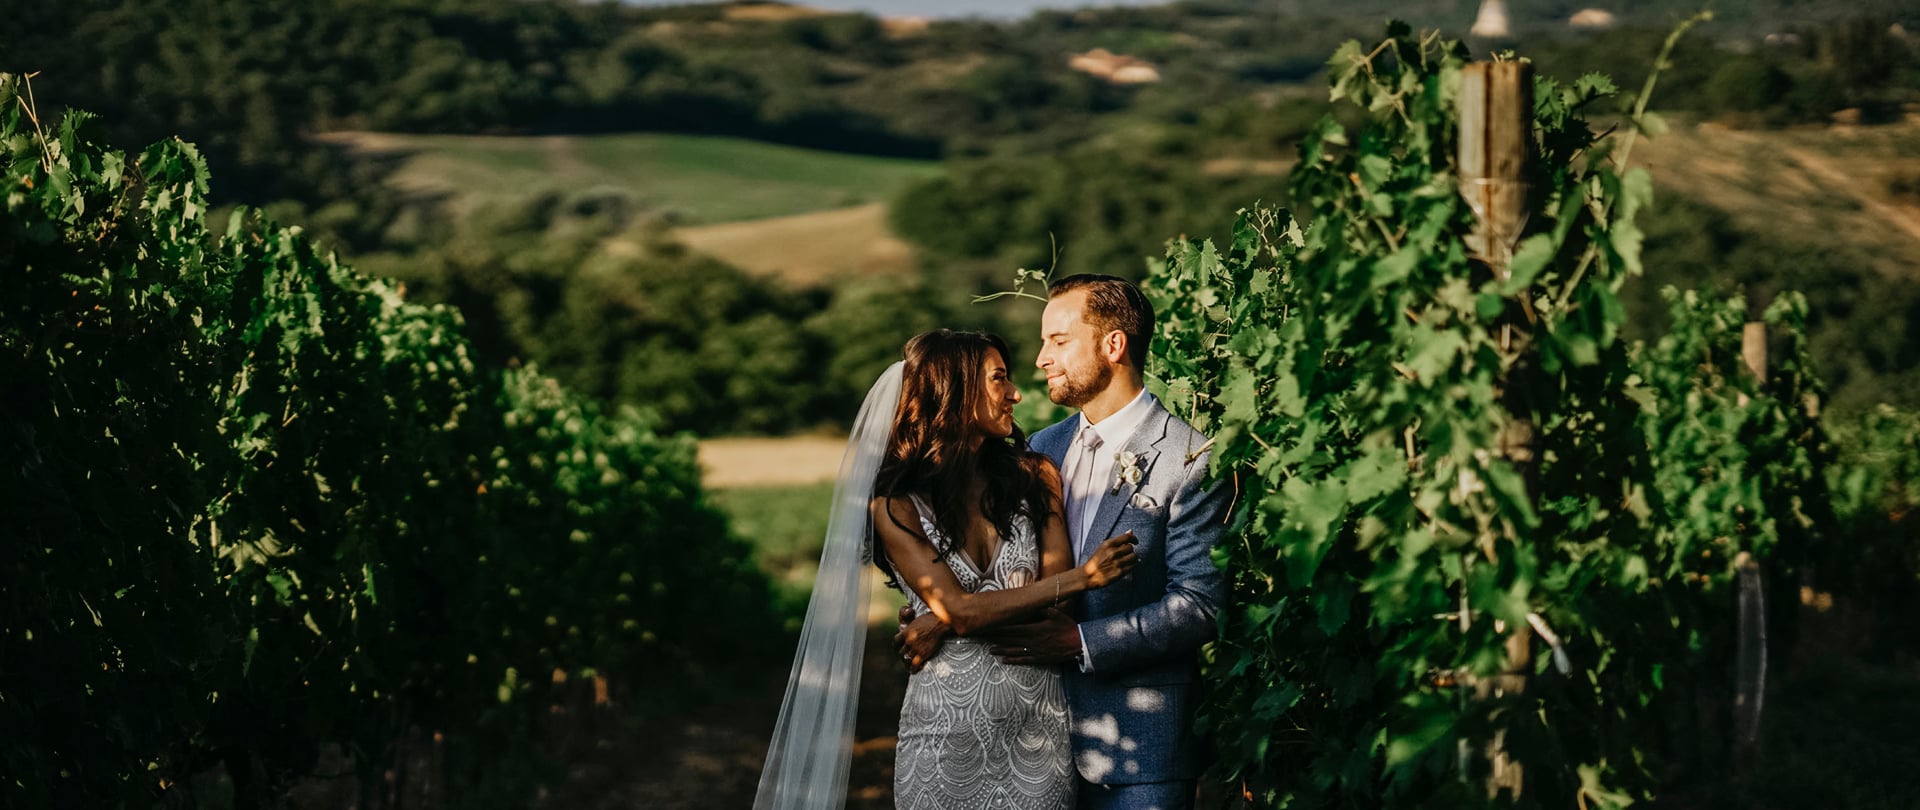 Victoria & Alex Wedding Video Filmed atTuscany,Italy